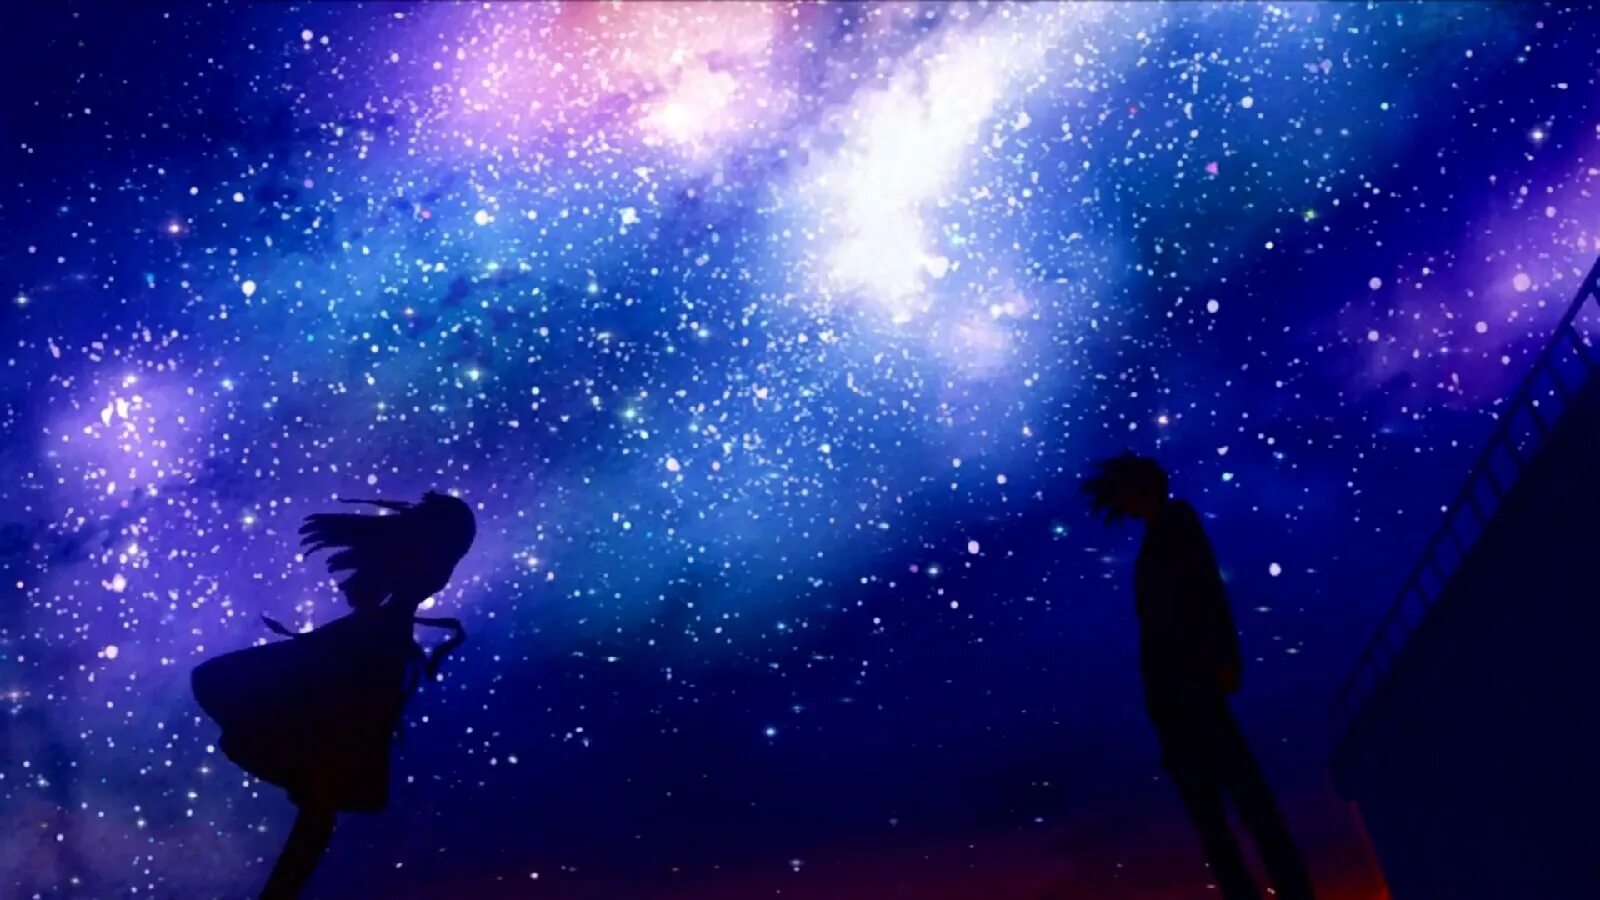 Звездное небо. Девушка и звездное небо. Ночное звездное небо. Человек на фоне звездного неба. Ария смотрящего на звезды